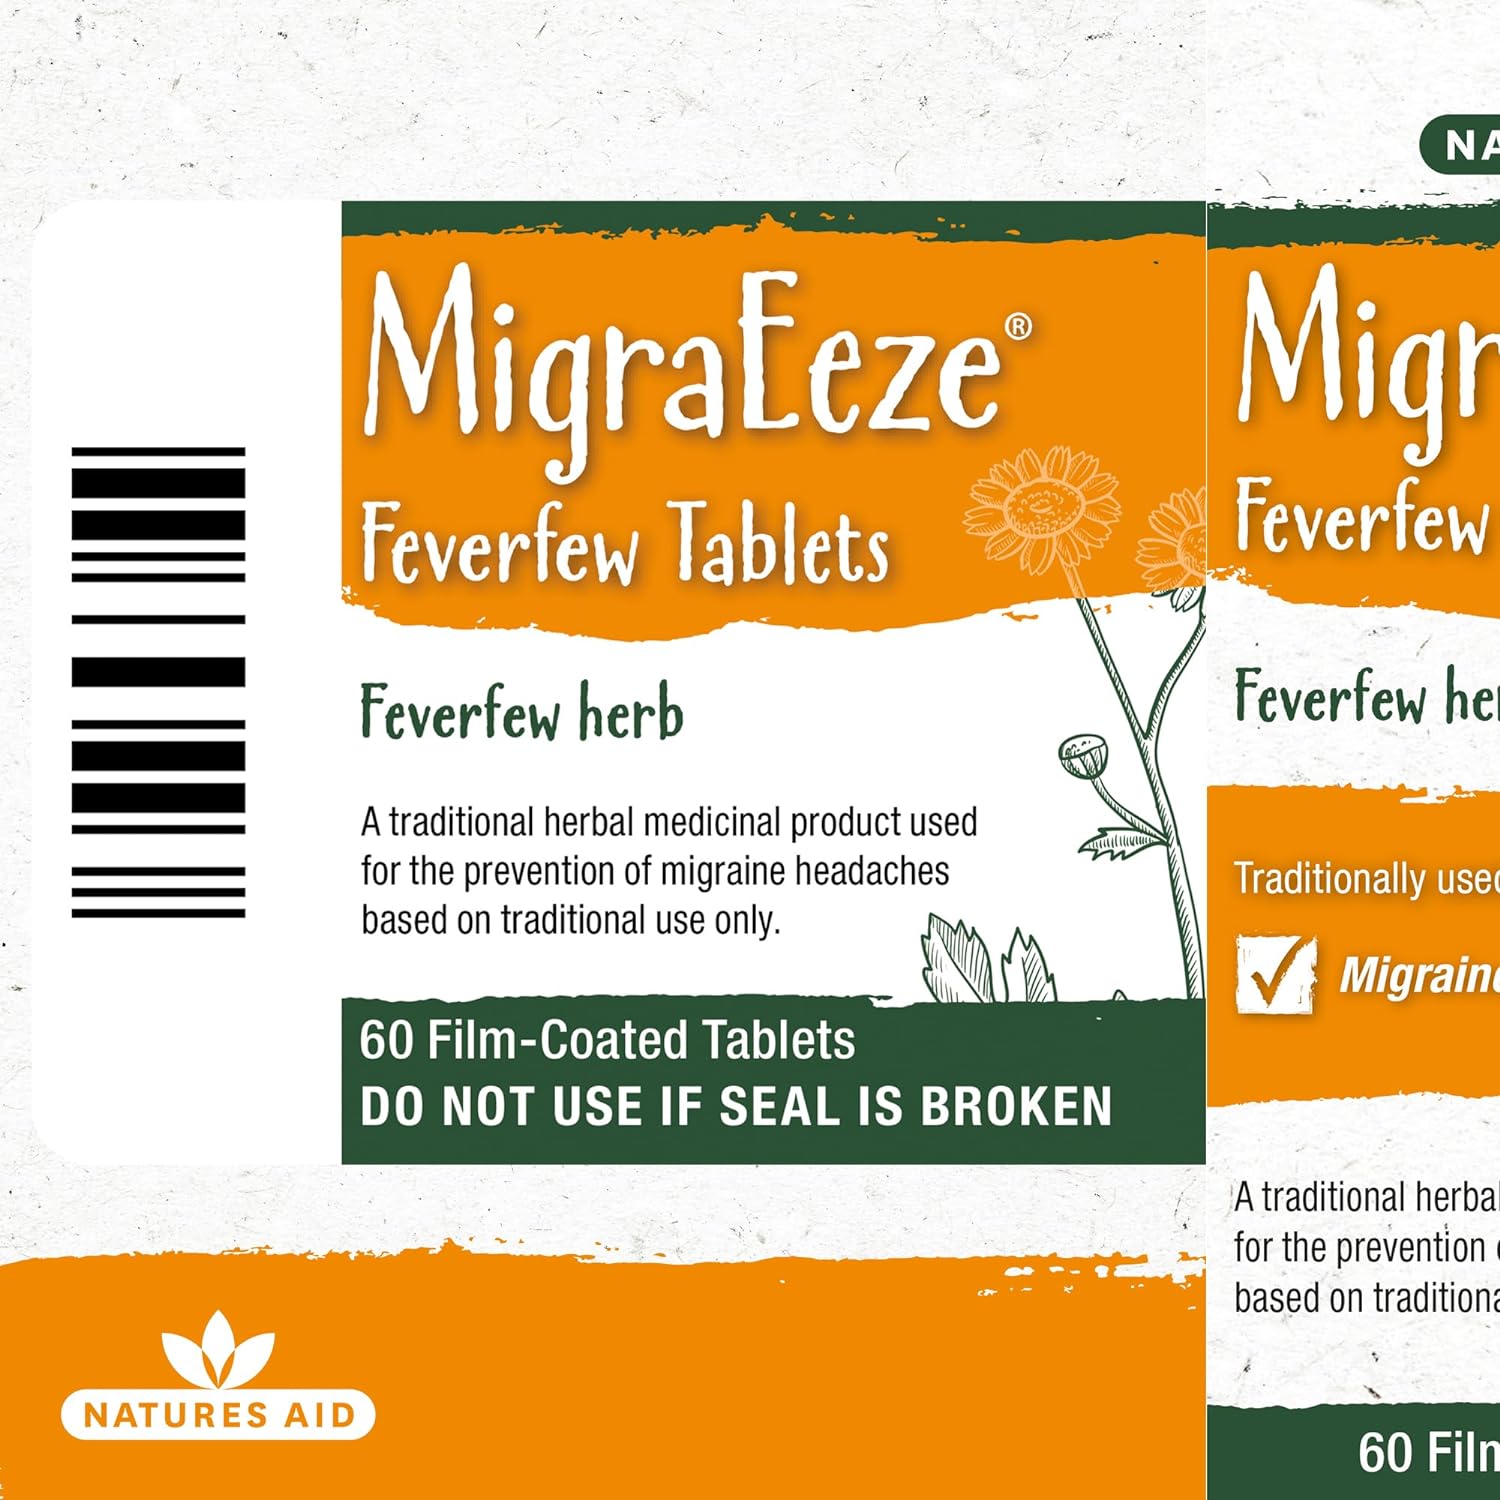 Herbal MigraEeze Feverfew Migraine Headaches 60 Tabs